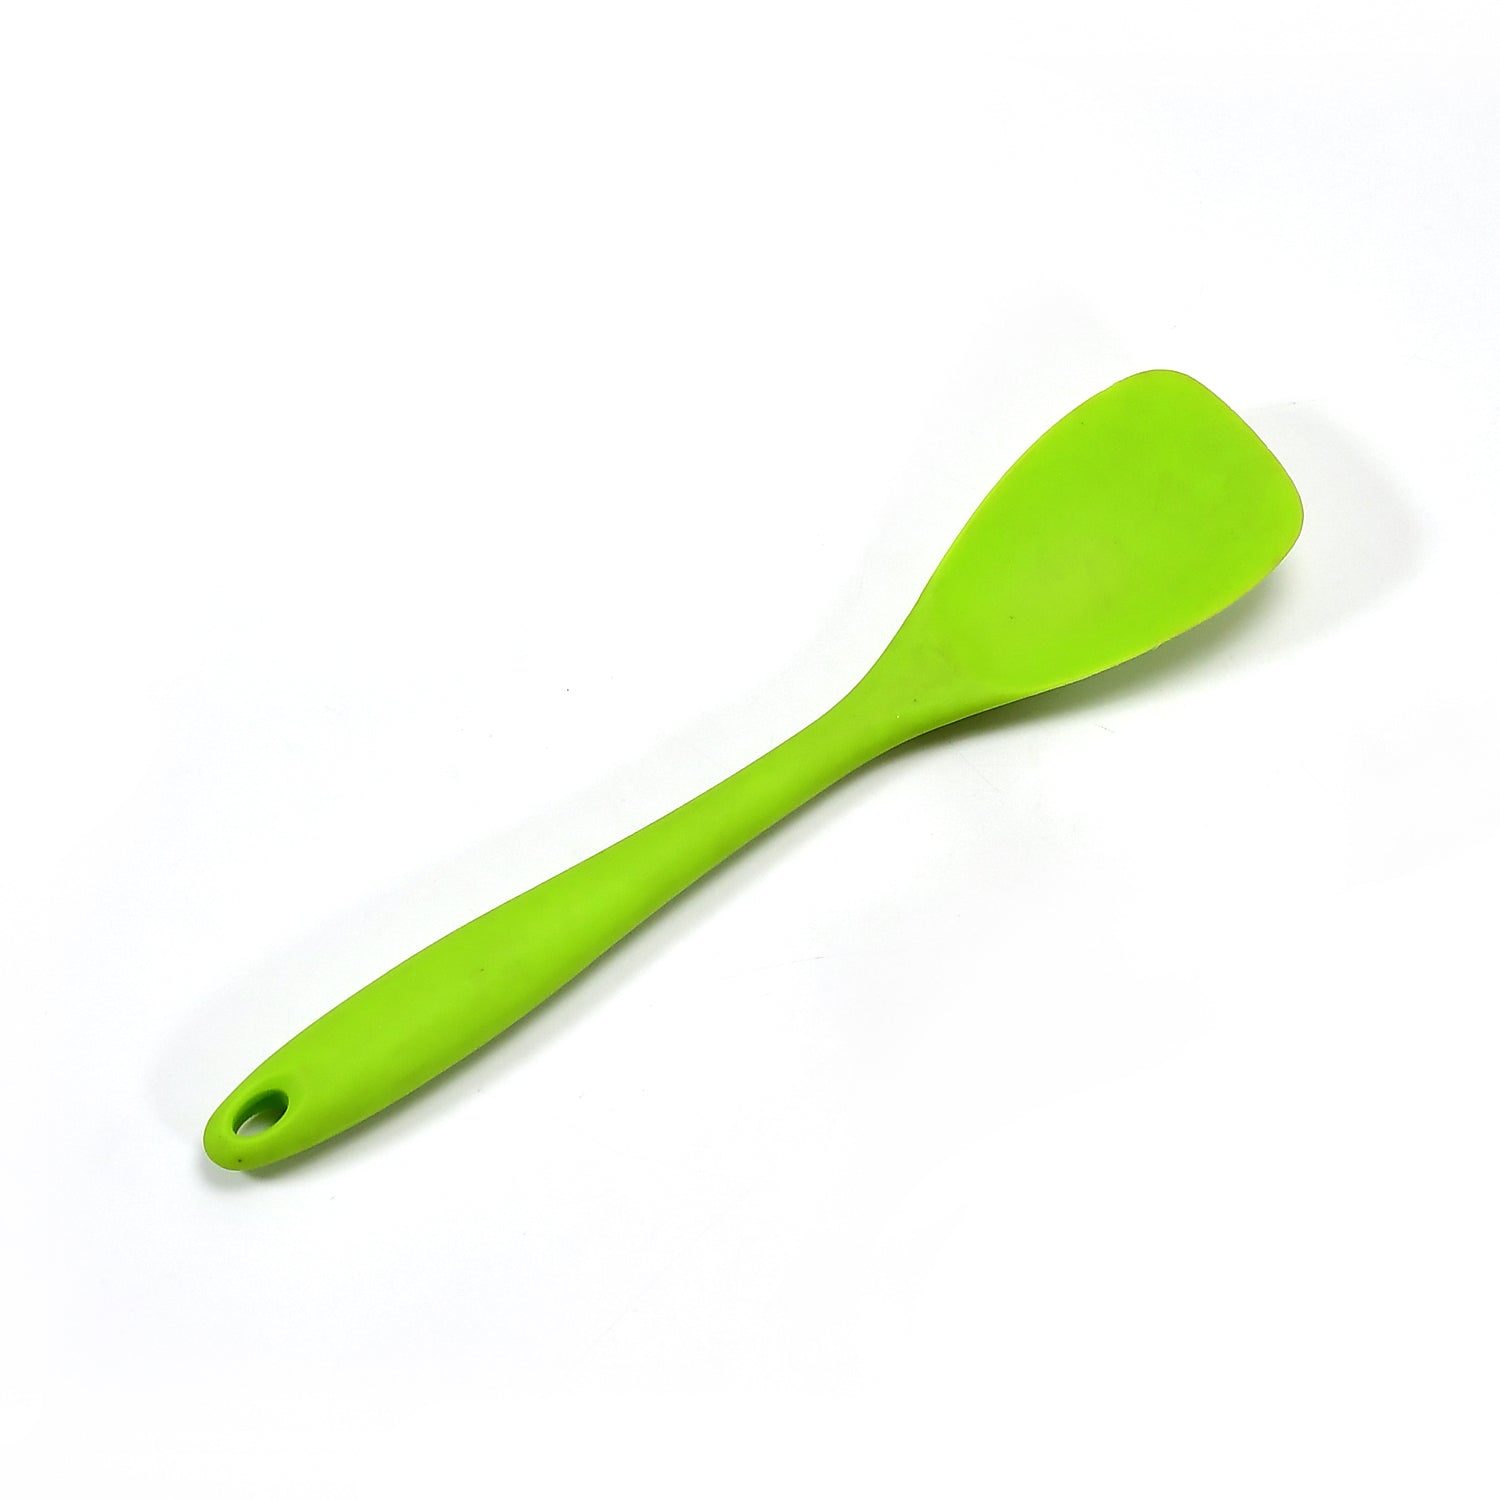 2866 Silicone Spoonula, Spatula Spoon, High Heat Resistant, Non Stick Rubber Utensil DeoDap